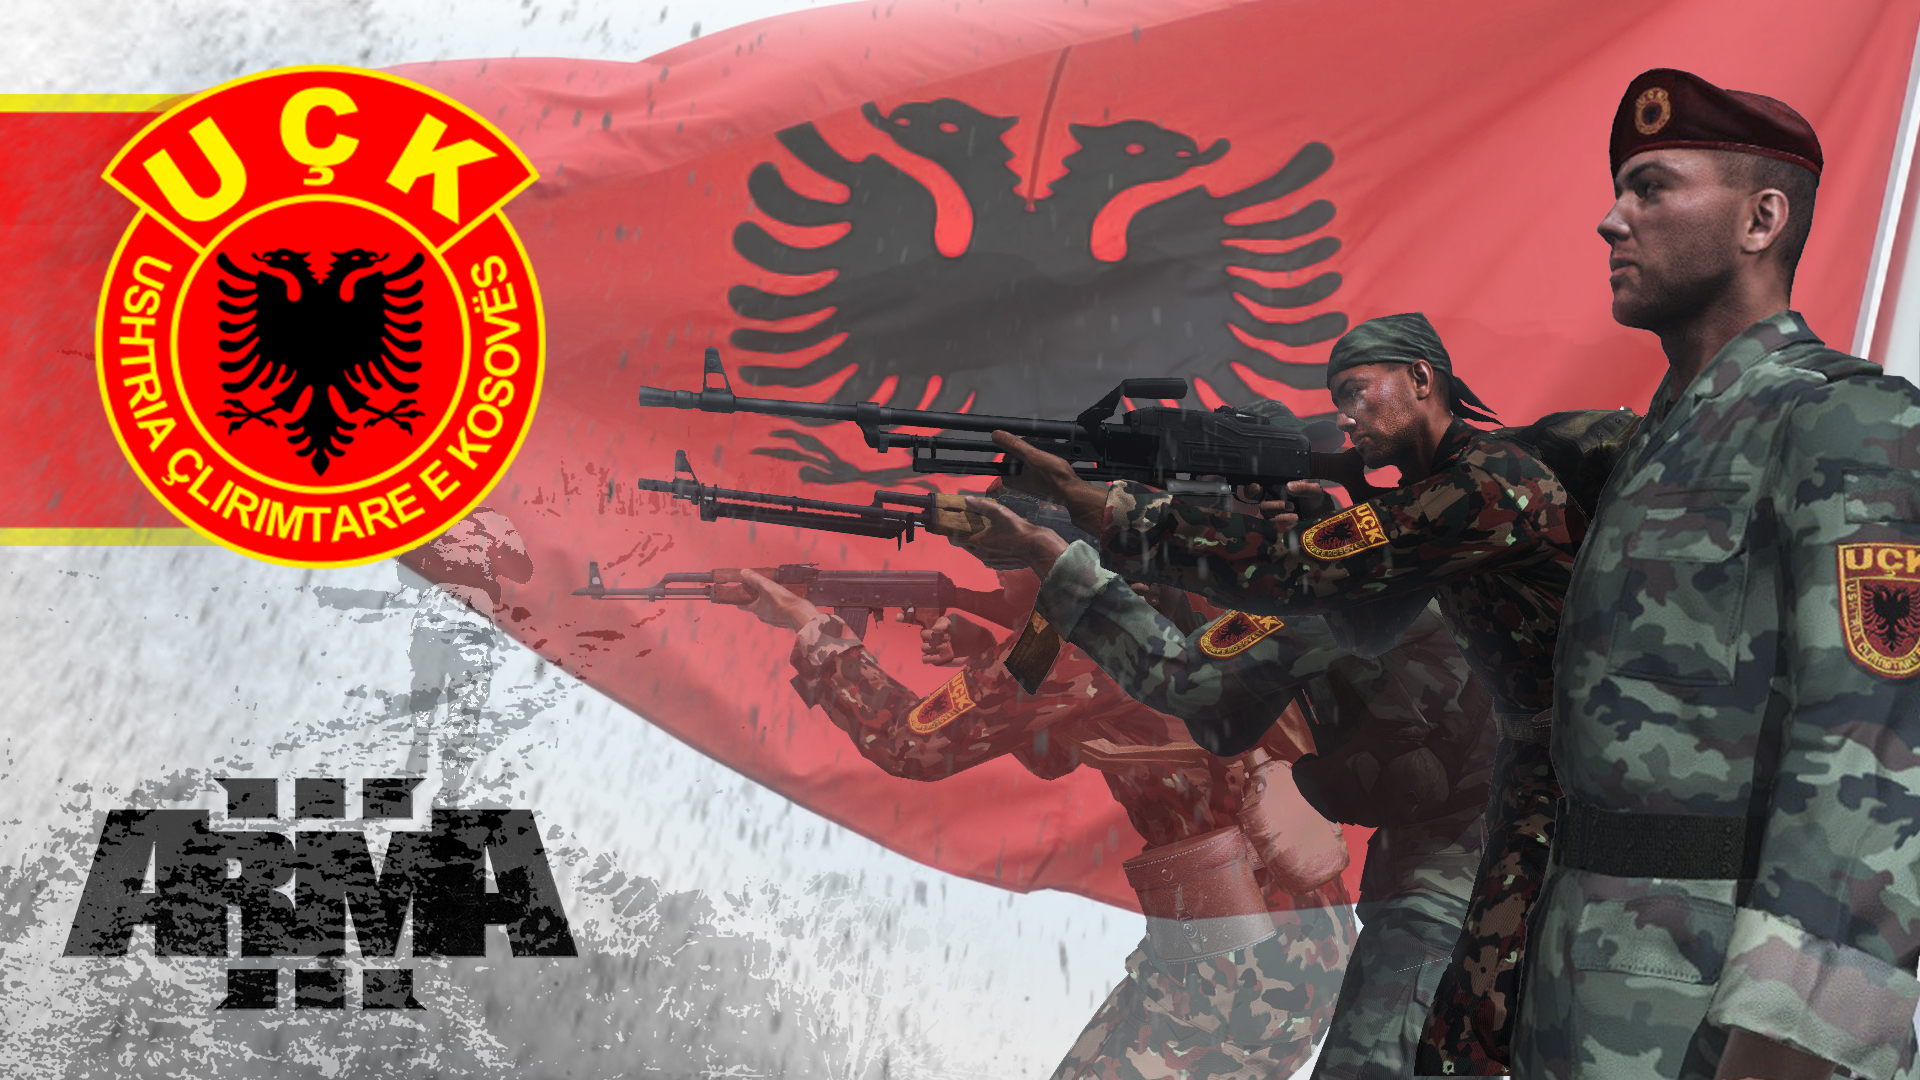 kosovo wallpaper,heer,soldat,militär ,marinesoldaten,spiele